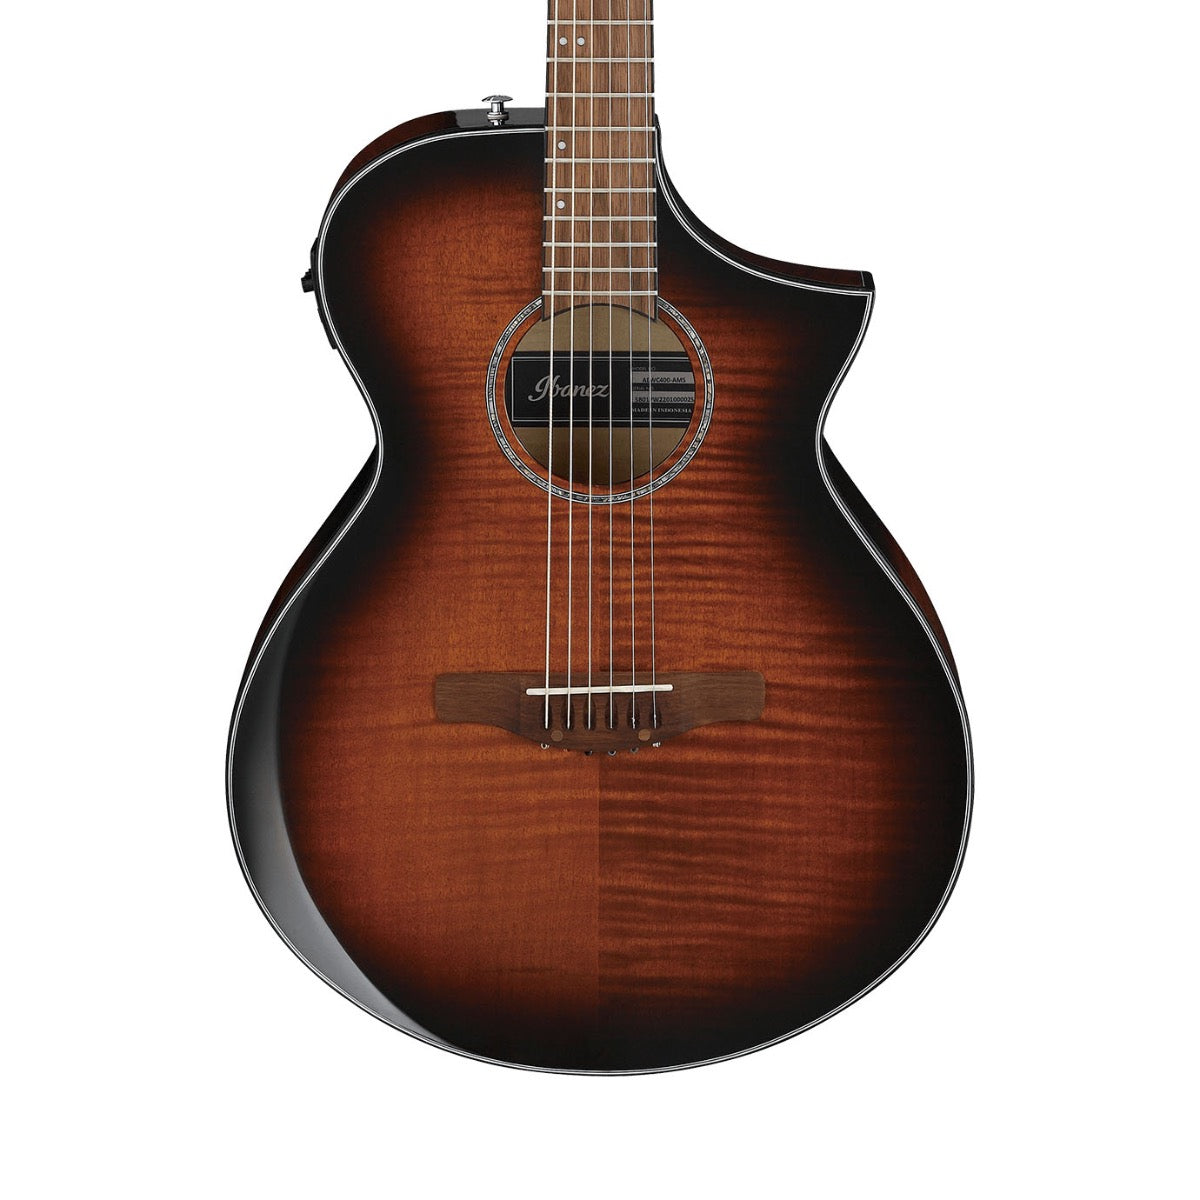 Ibanez AEWC400AMS AEWC Acoustic/Electric Guitar - Amber Sunburst High Gloss, View 1